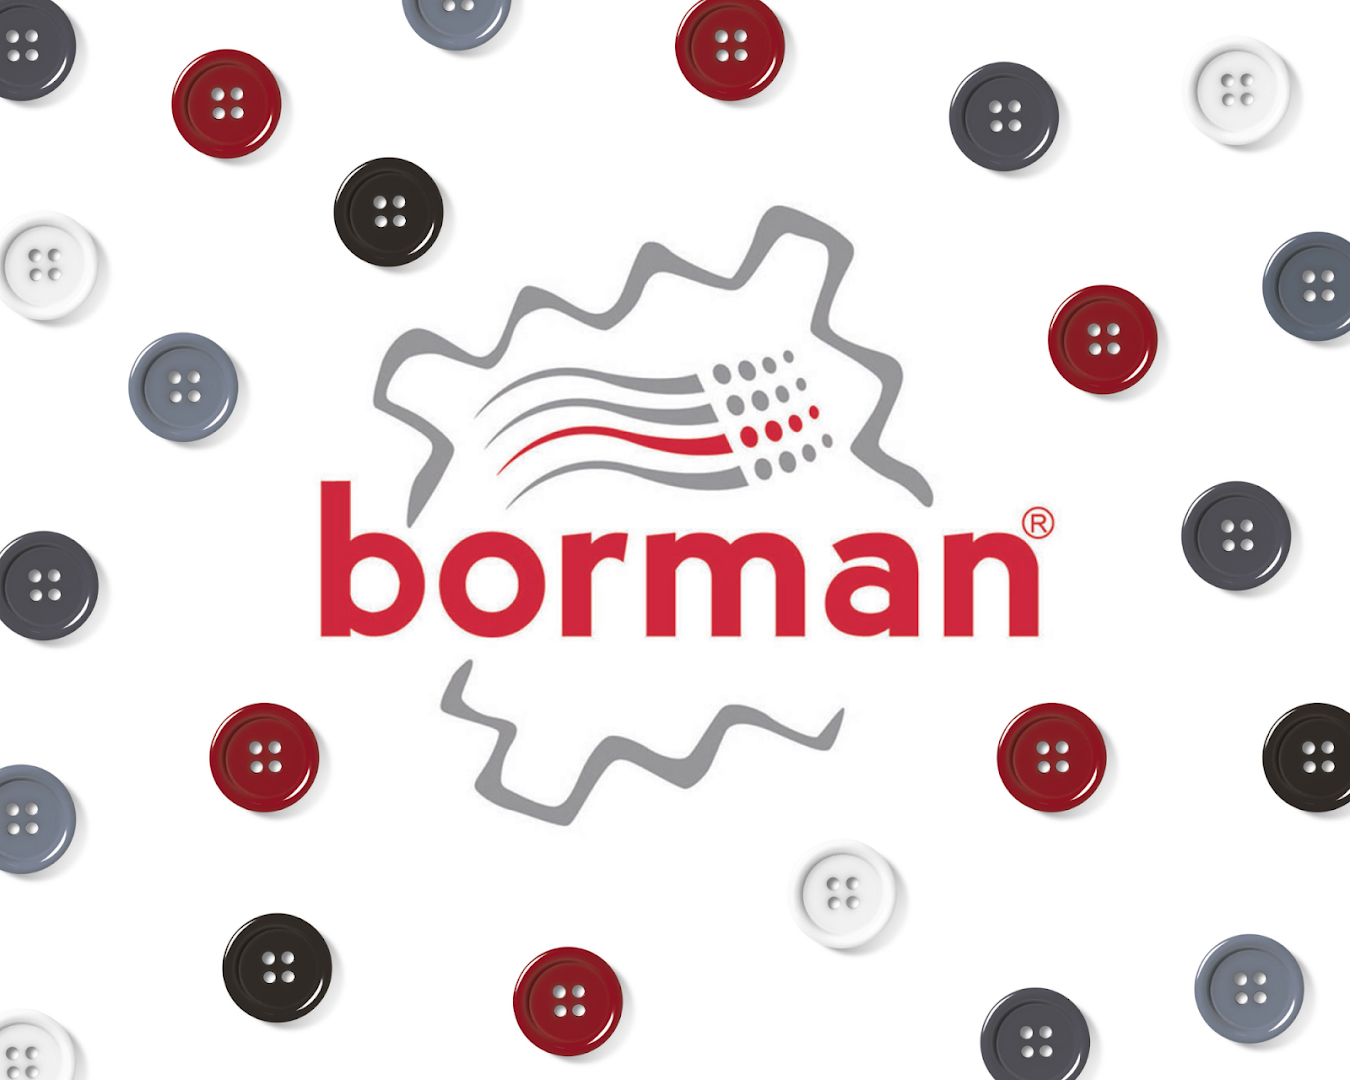 Borman Industria Textil